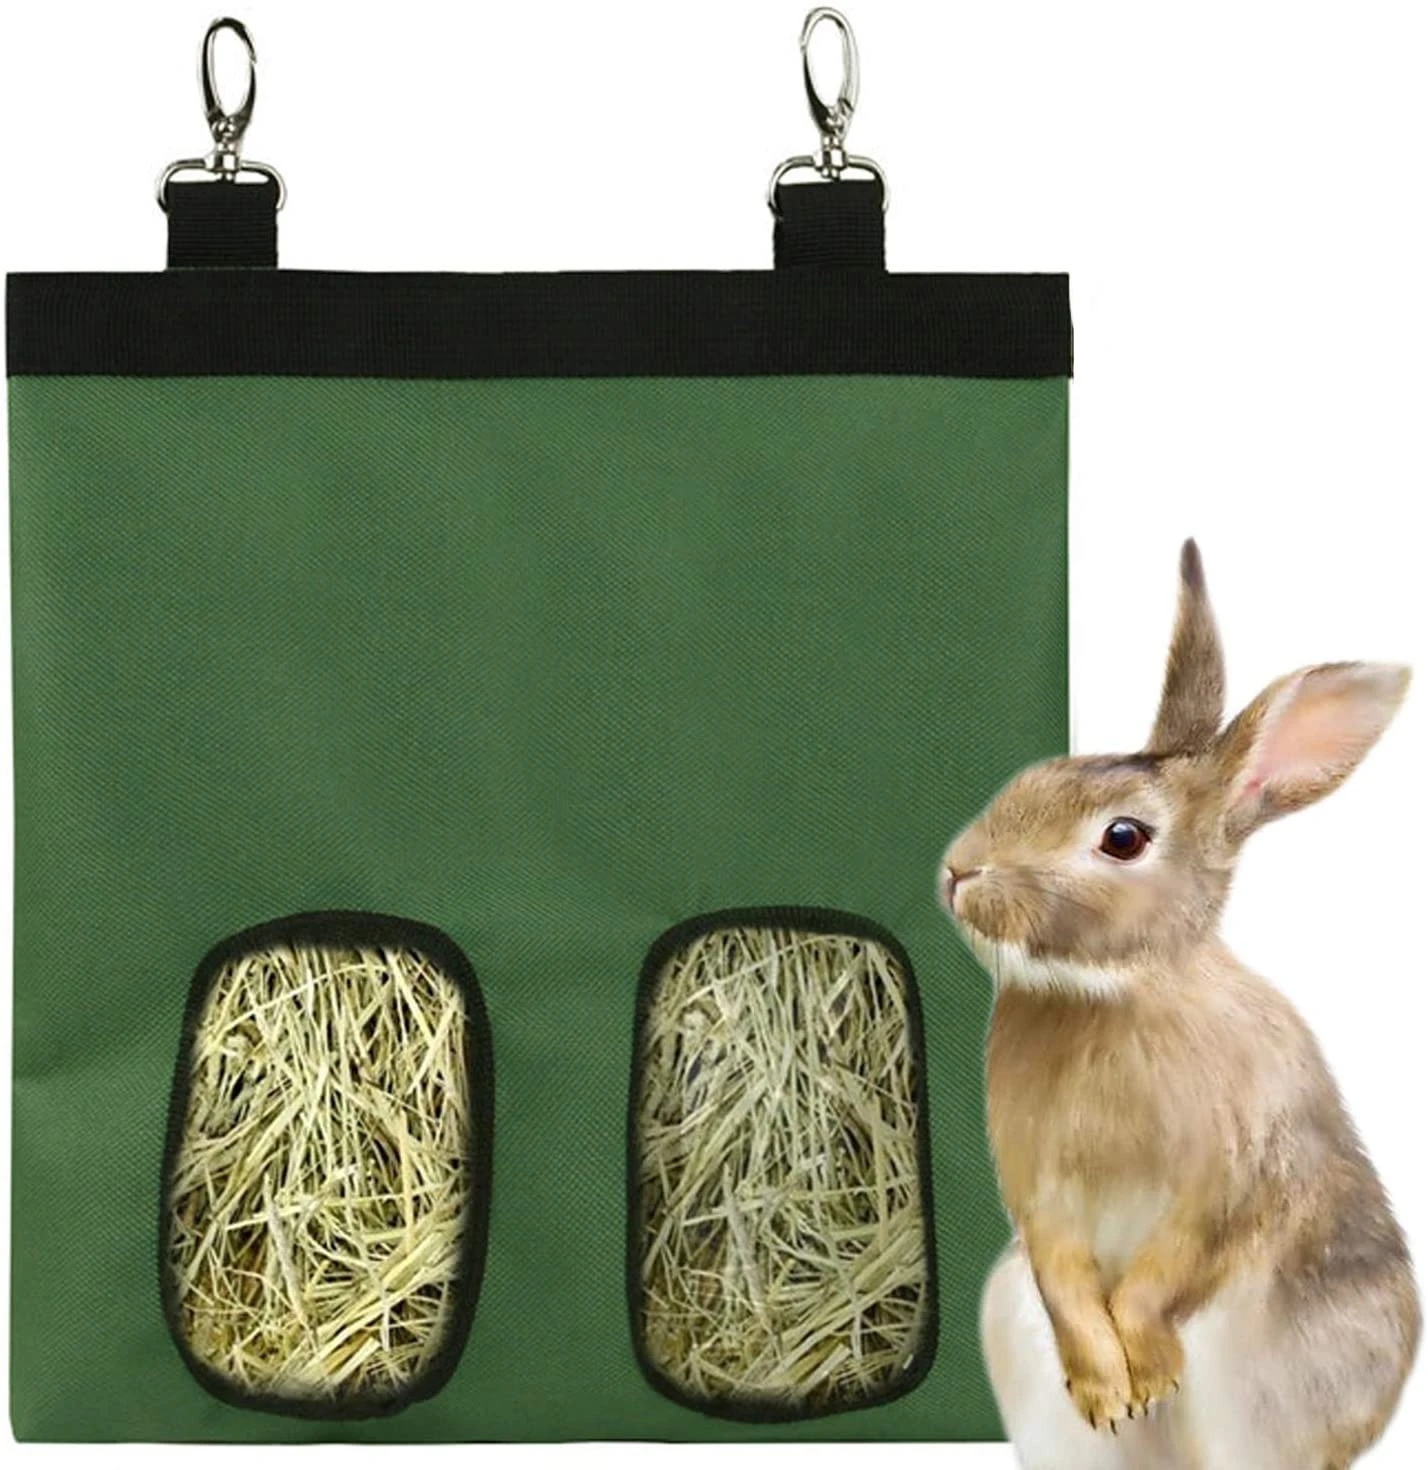 Small Animals Rabbit Bunny Chinchilla Hay Bag for Guinea Pig, Hanging Feeder Hamster Food Sack Holder